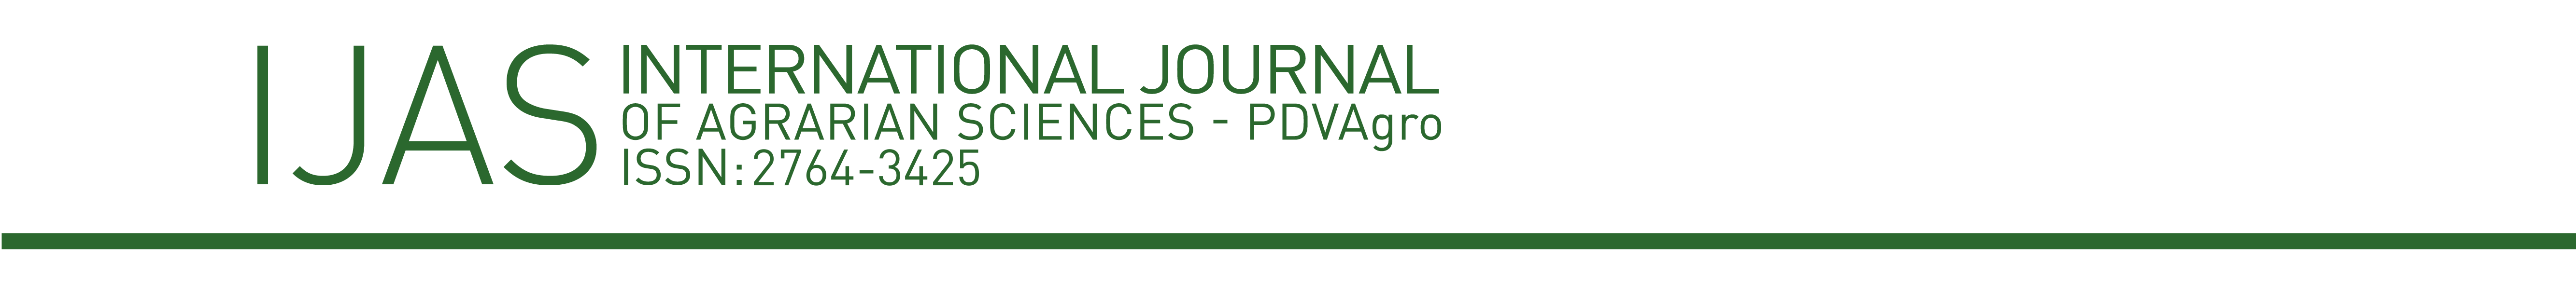 International Journal of Agrarian Sciences - PDAVGRO